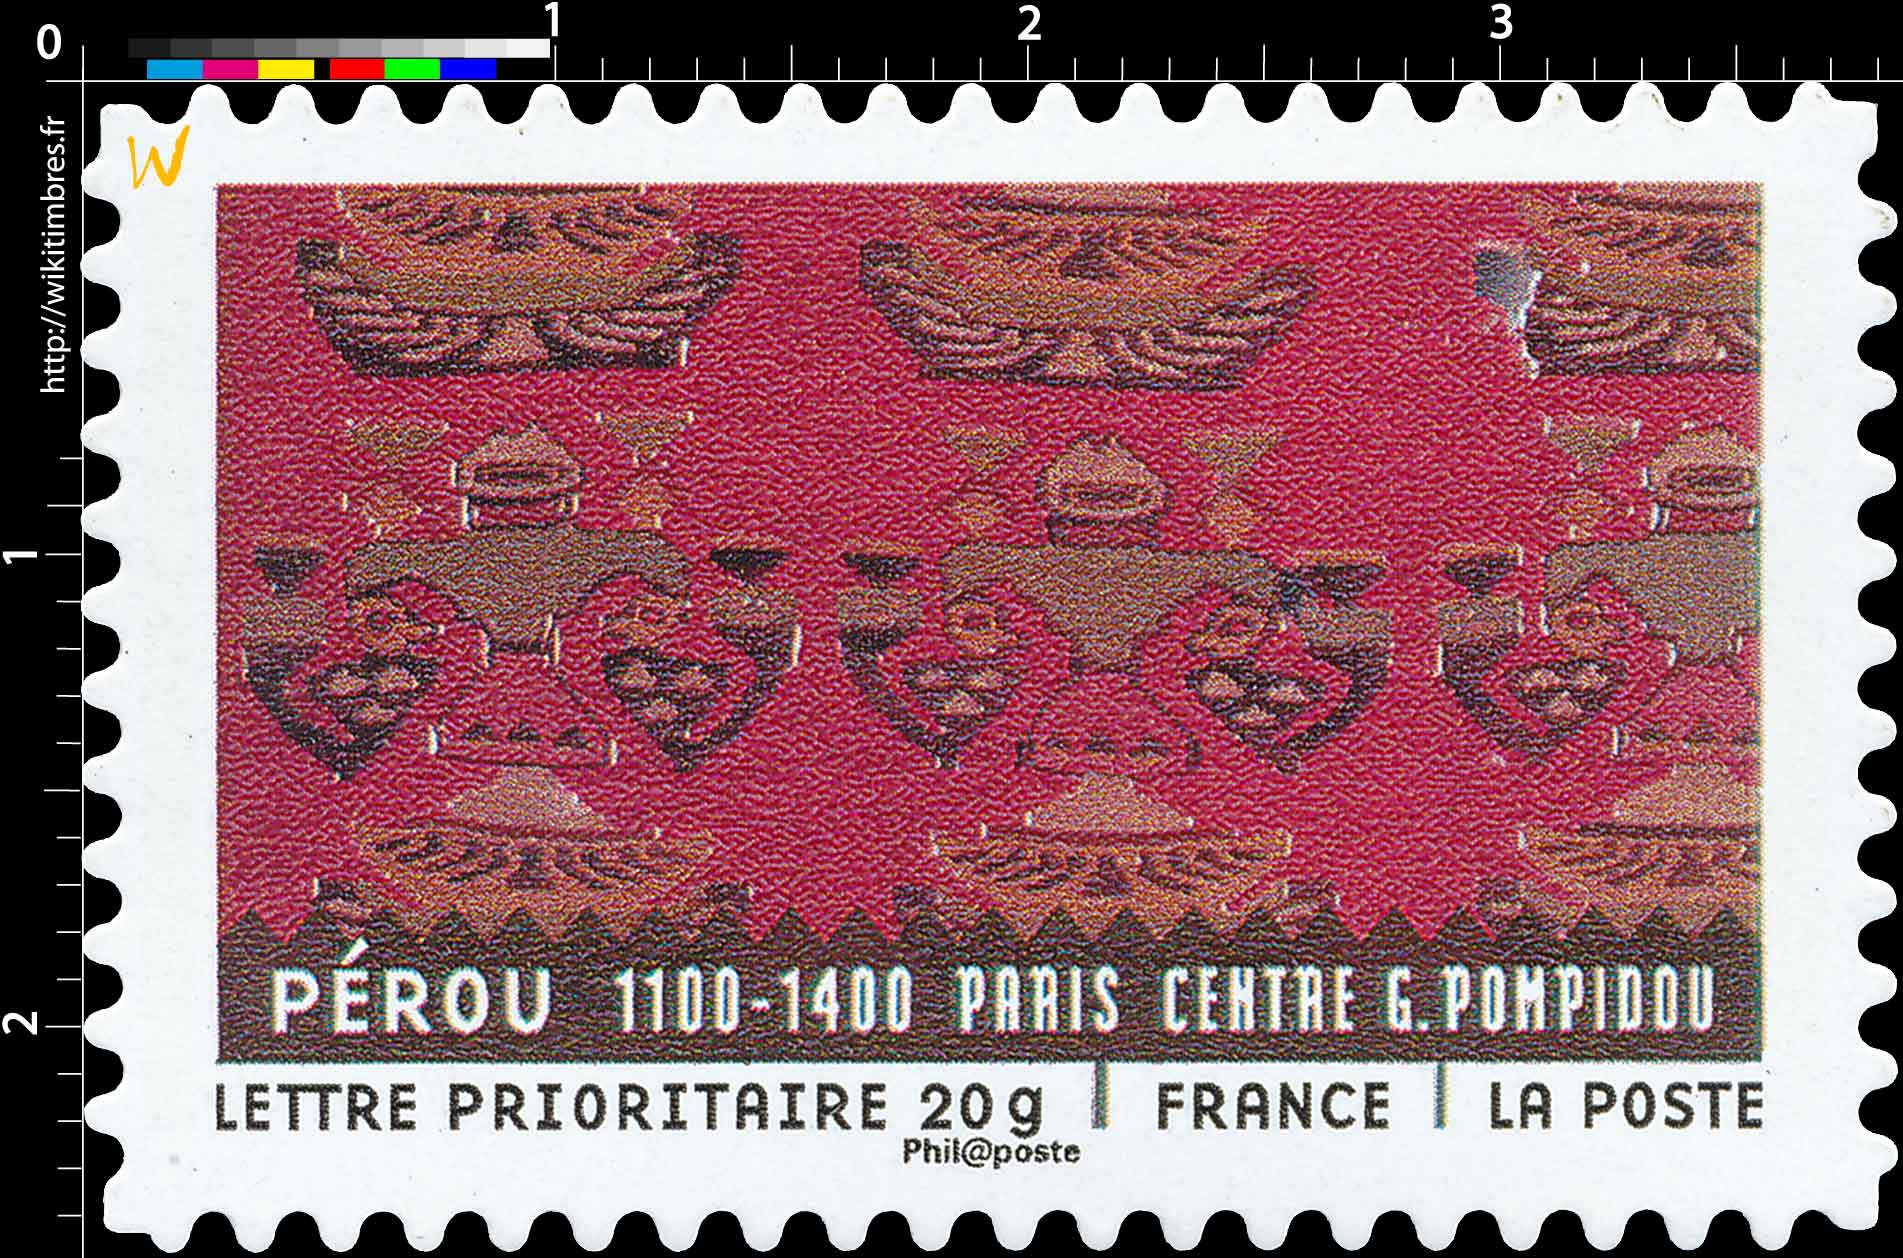 PÉROU 1100-1400 PARIS CENTRE G. POMPIDOU